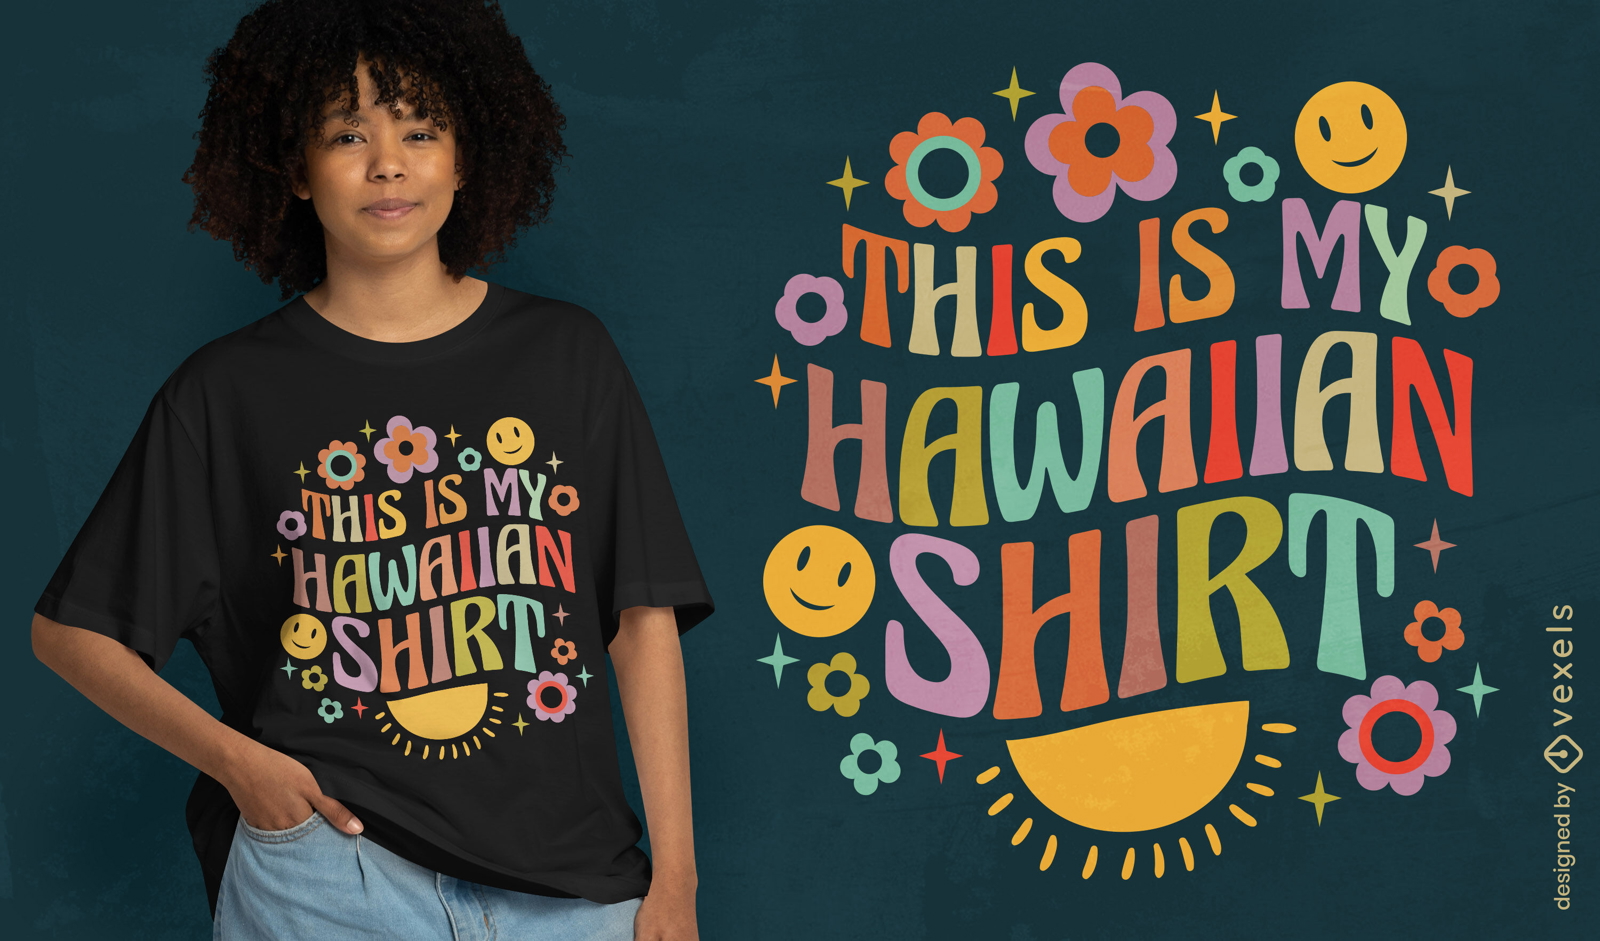 This is my hawaiian shirt t-shirt design